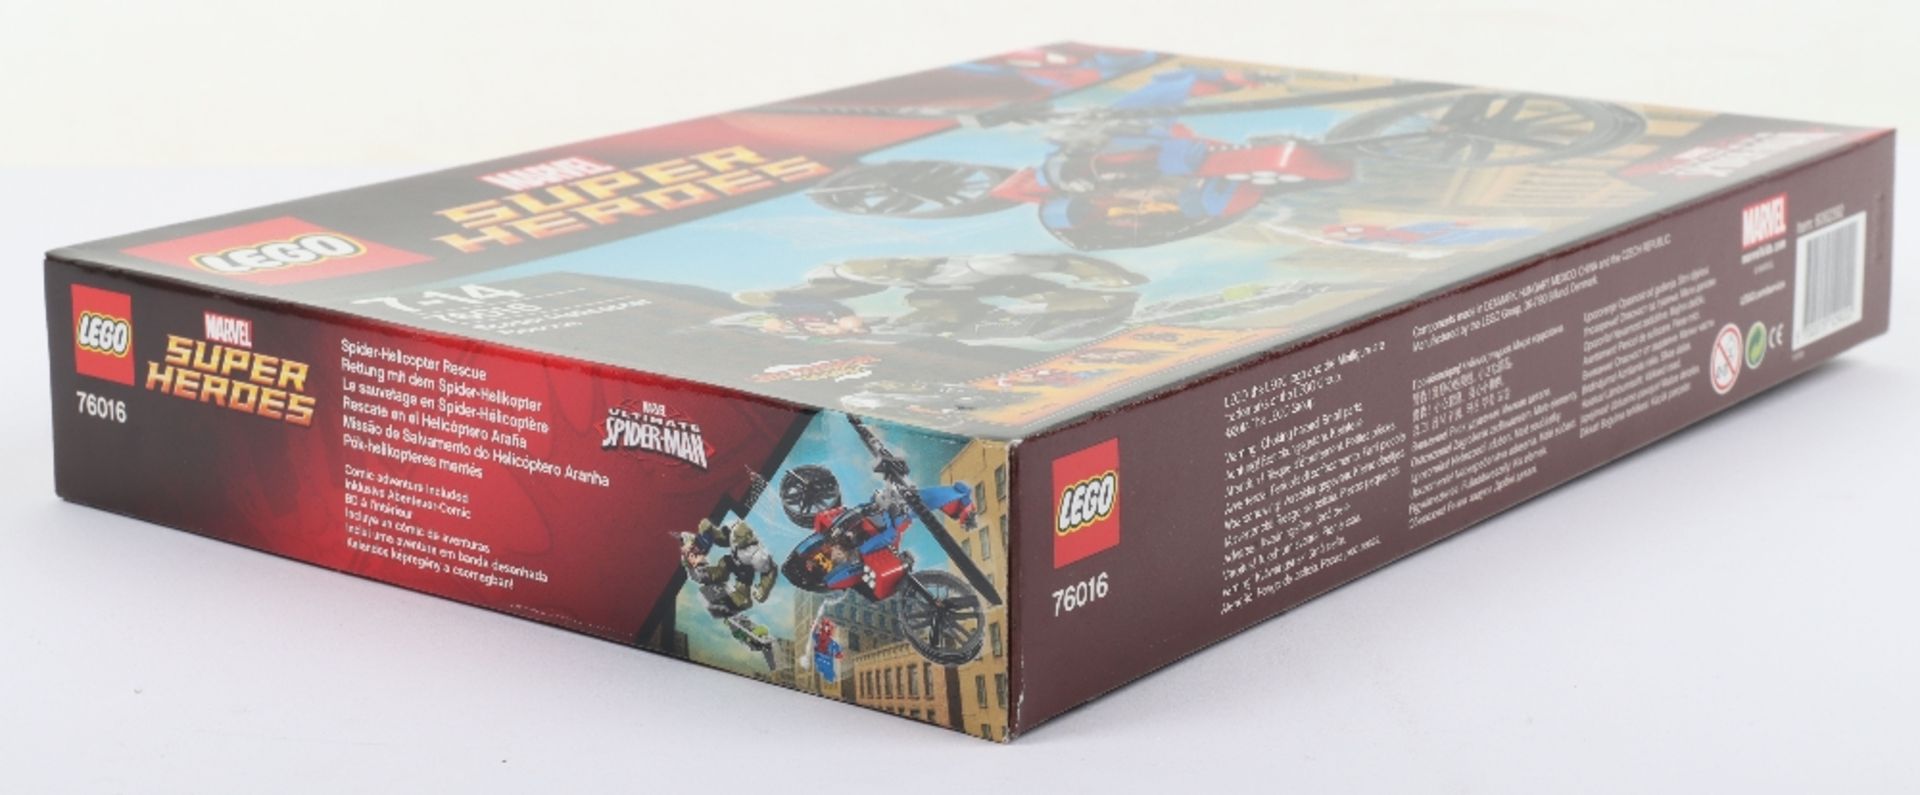 Lego Marvel Superheroes 76016 Spider-helicopter rescue sealed set - Image 6 of 7